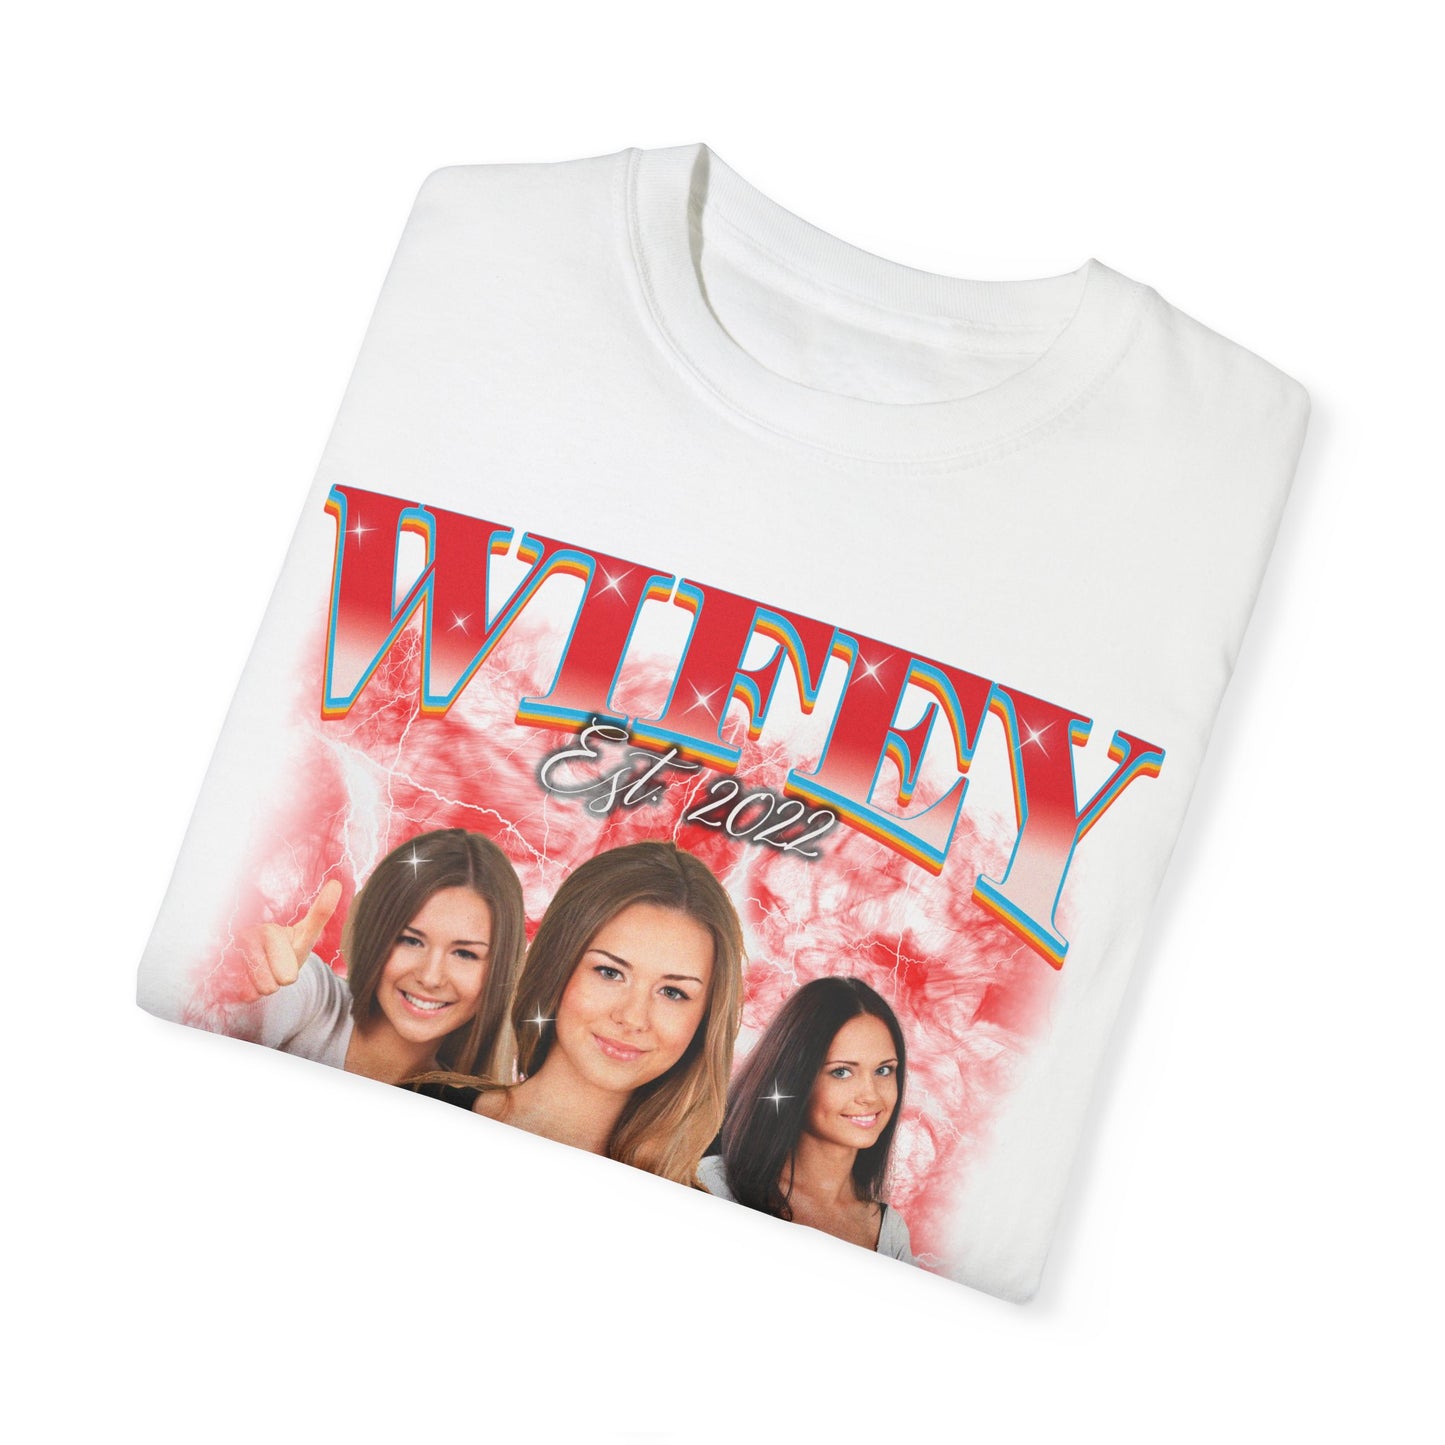 Custom Wifey Bootleg Rap Tee, Wifey Shirt, Custom Wifey Photo Shirt, Vintage Graphic 90s Tshirt, Valentine's Shirt Gift For Wife, CC1627